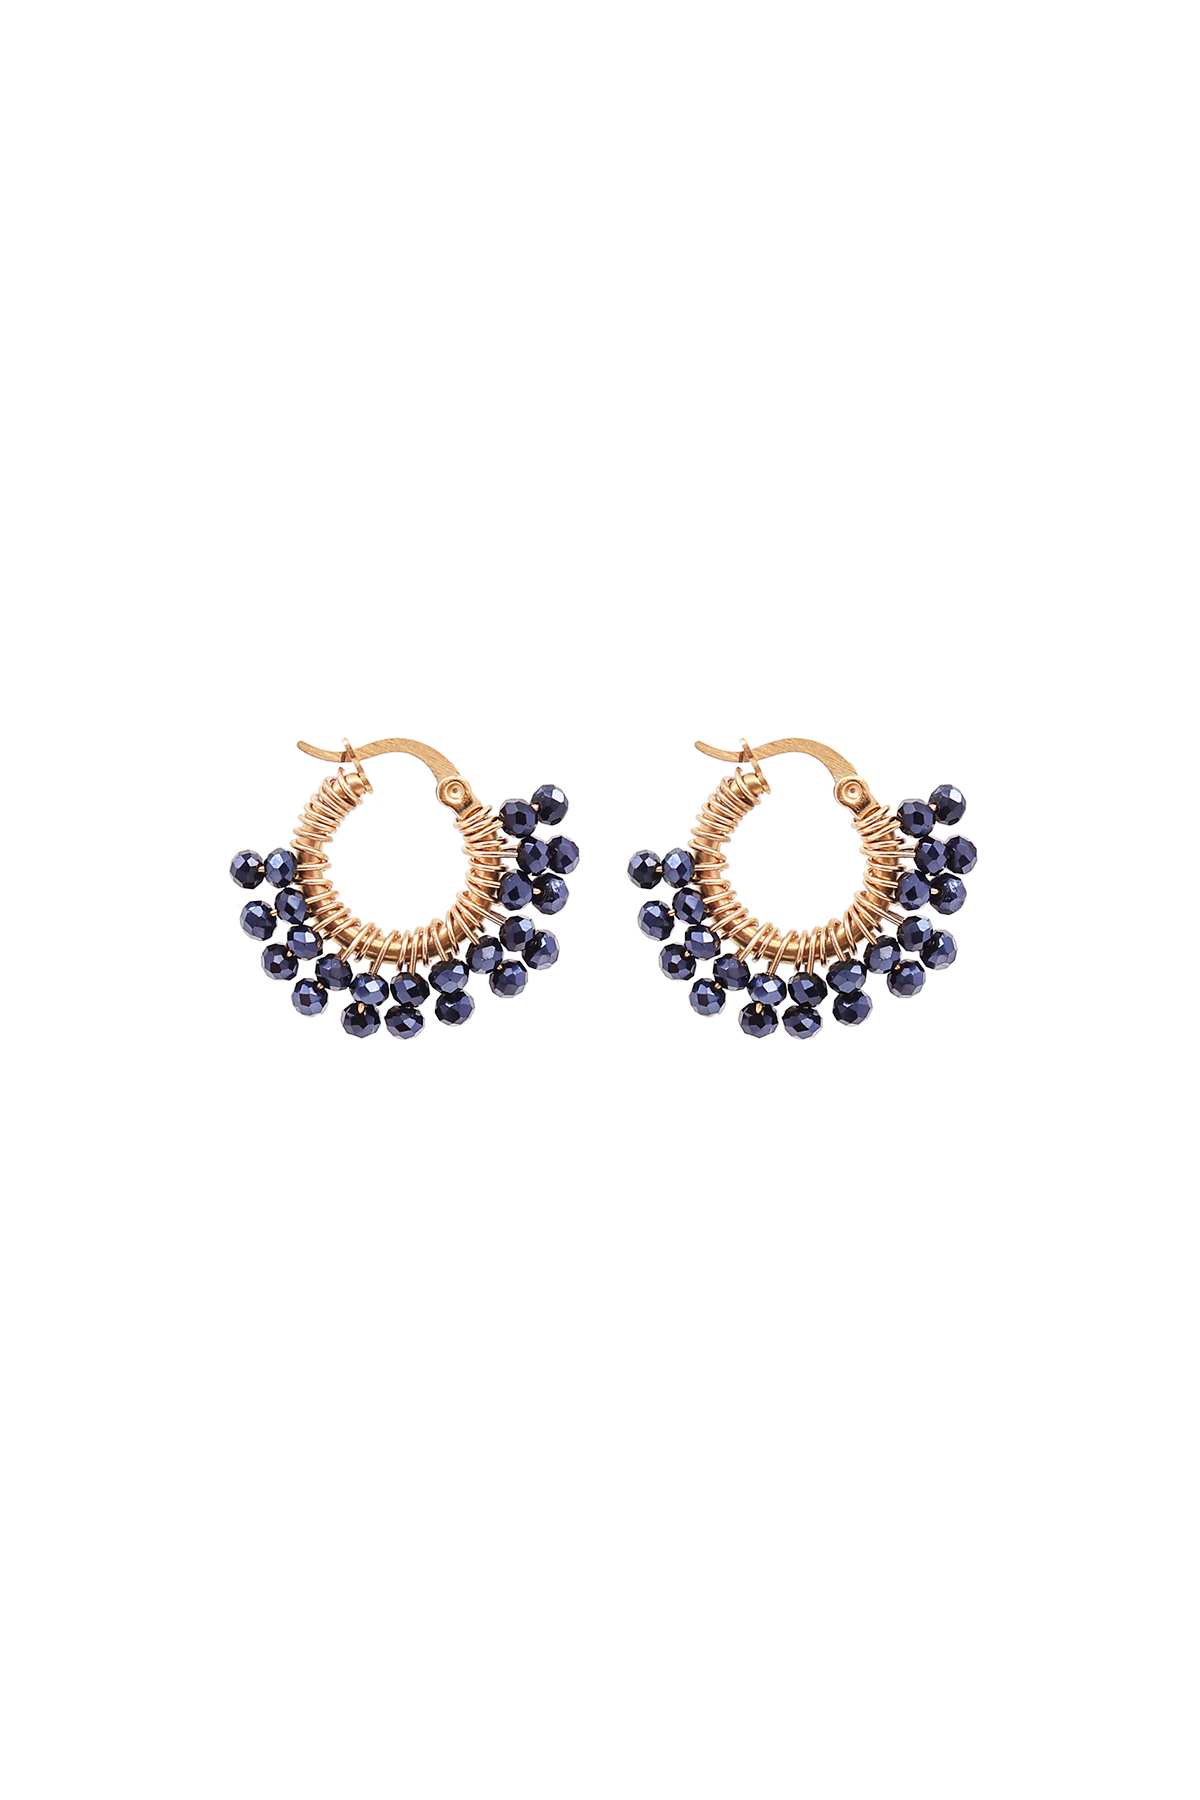 Tiny Glam loop earrings - Midnight blue to black